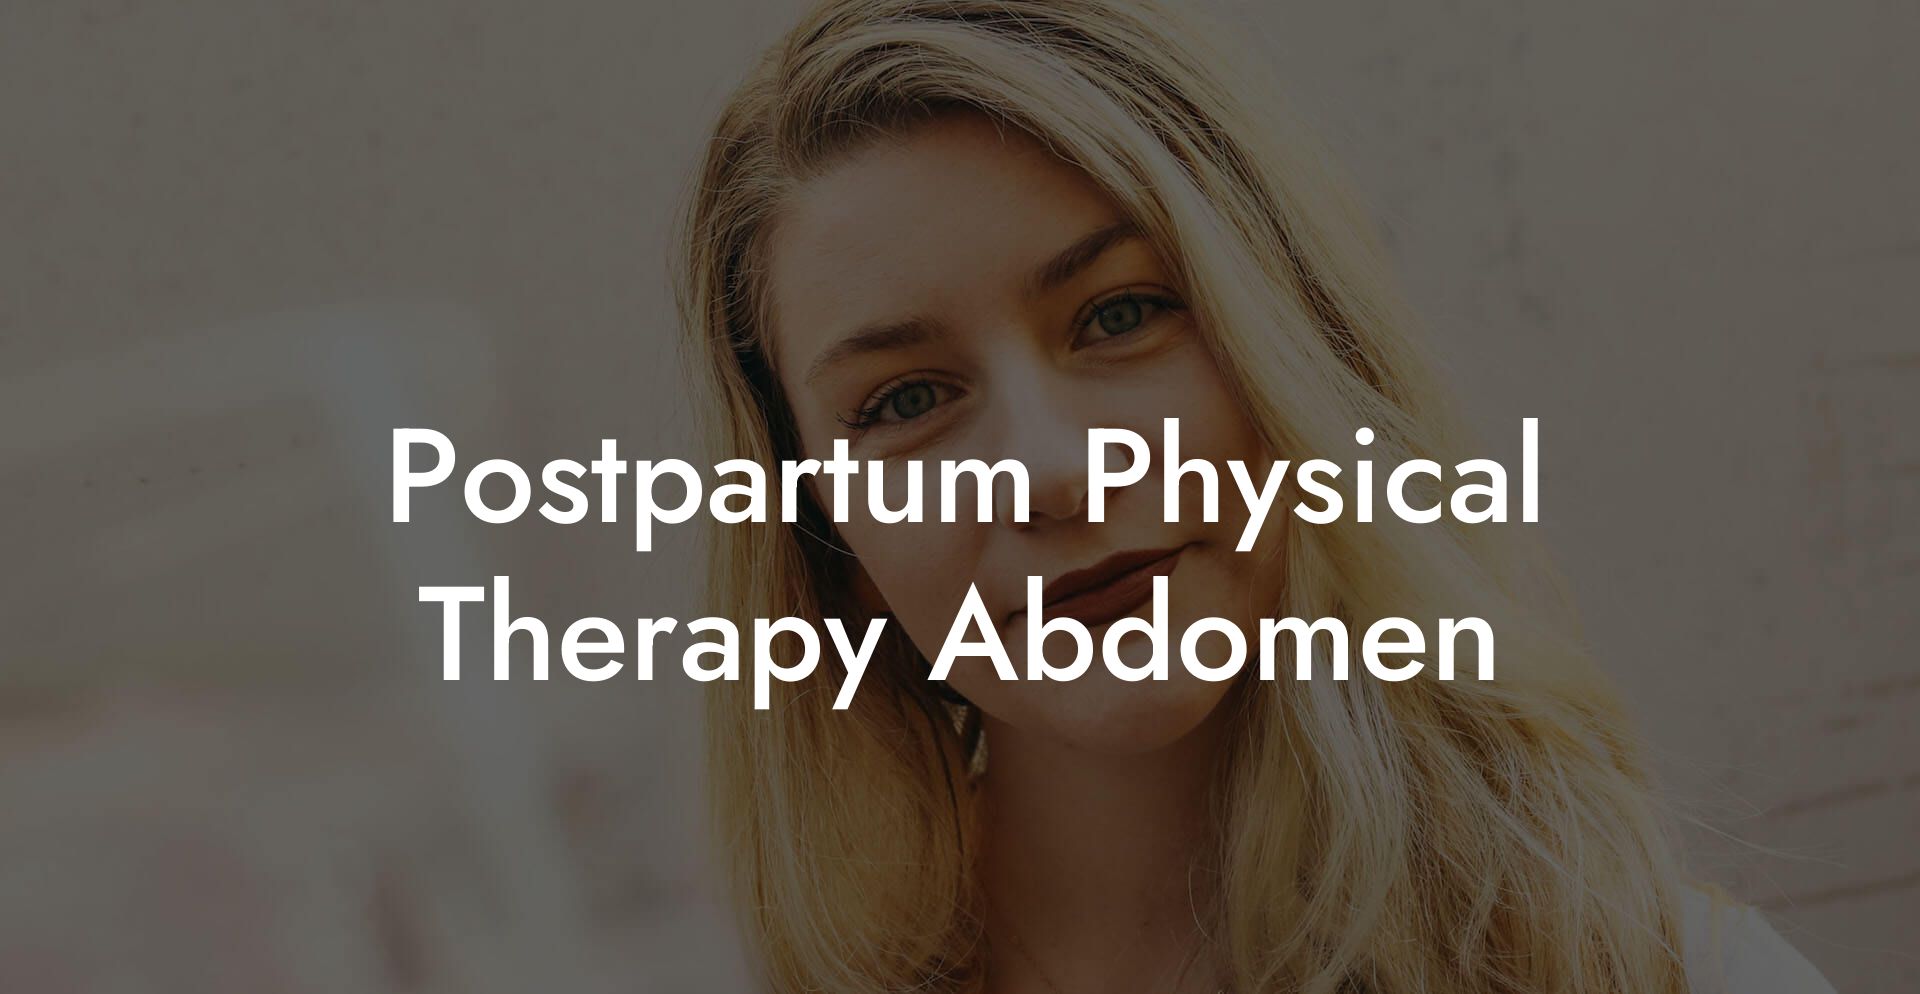 Postpartum Physical Therapy Abdomen